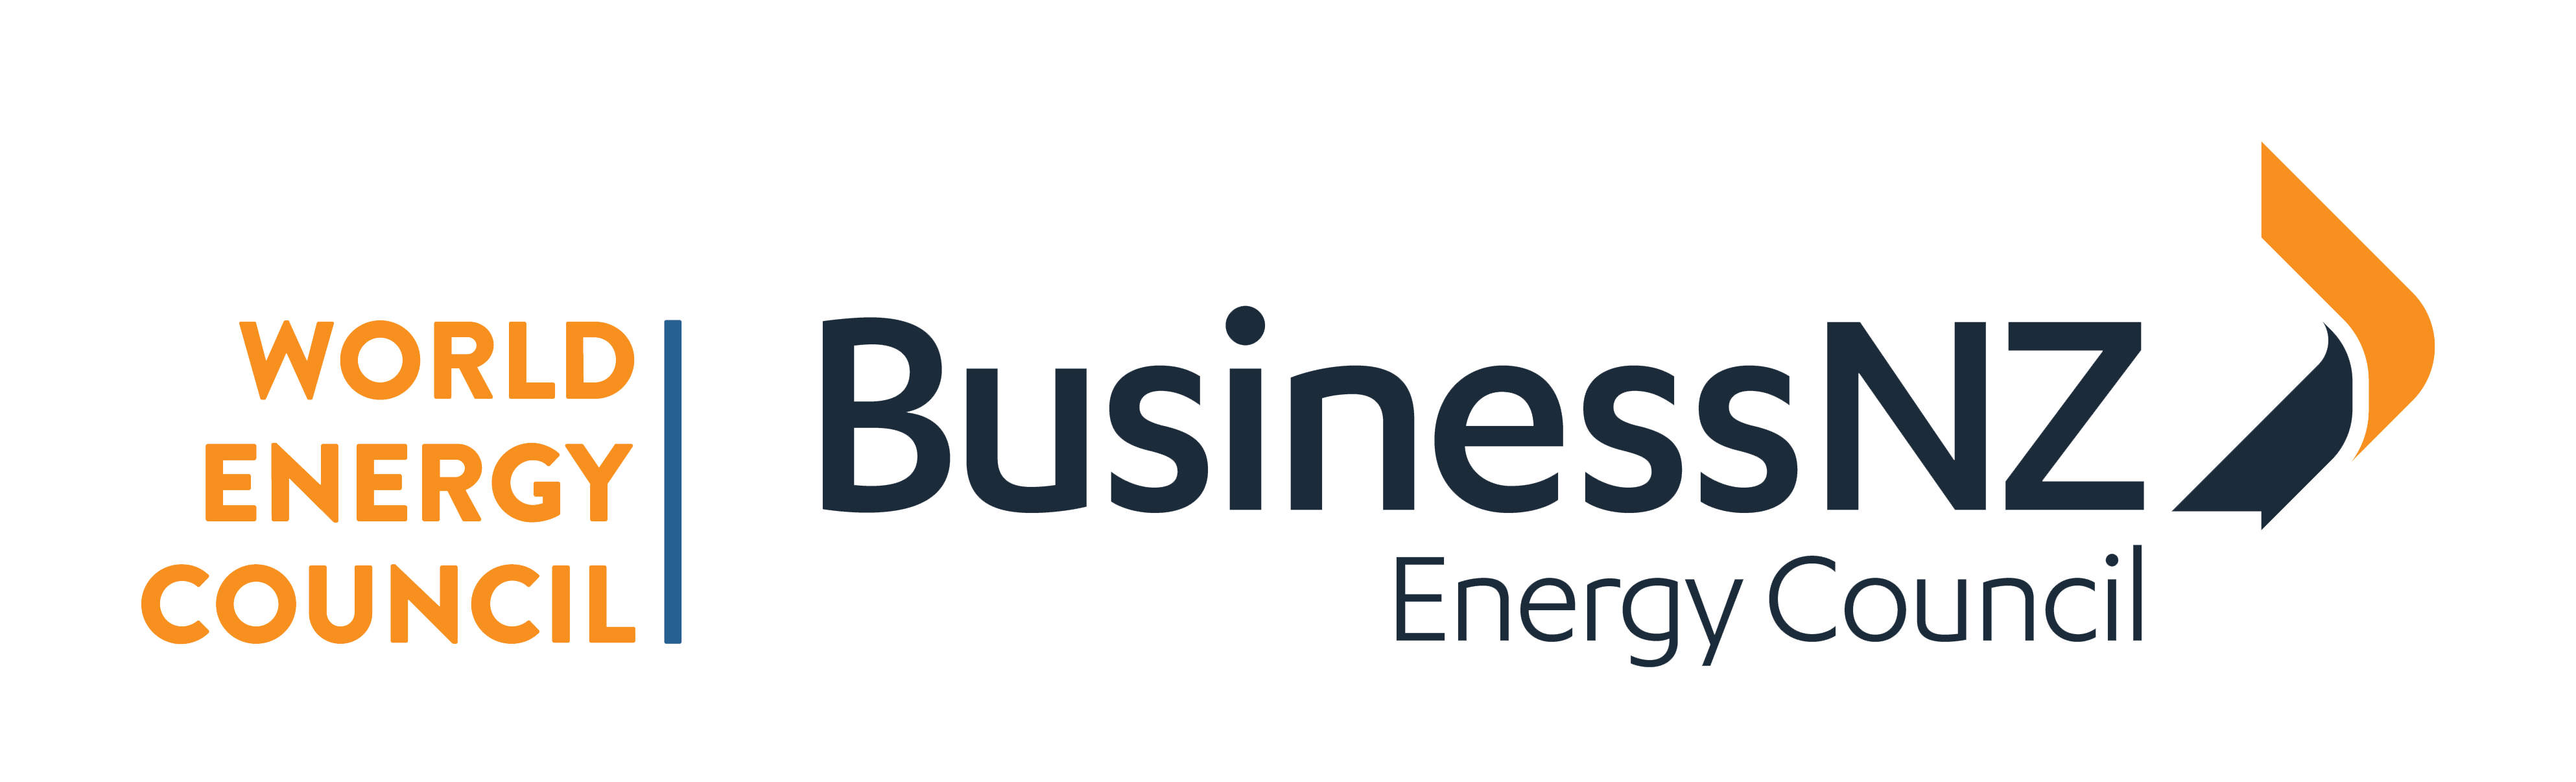 Business Energy Council